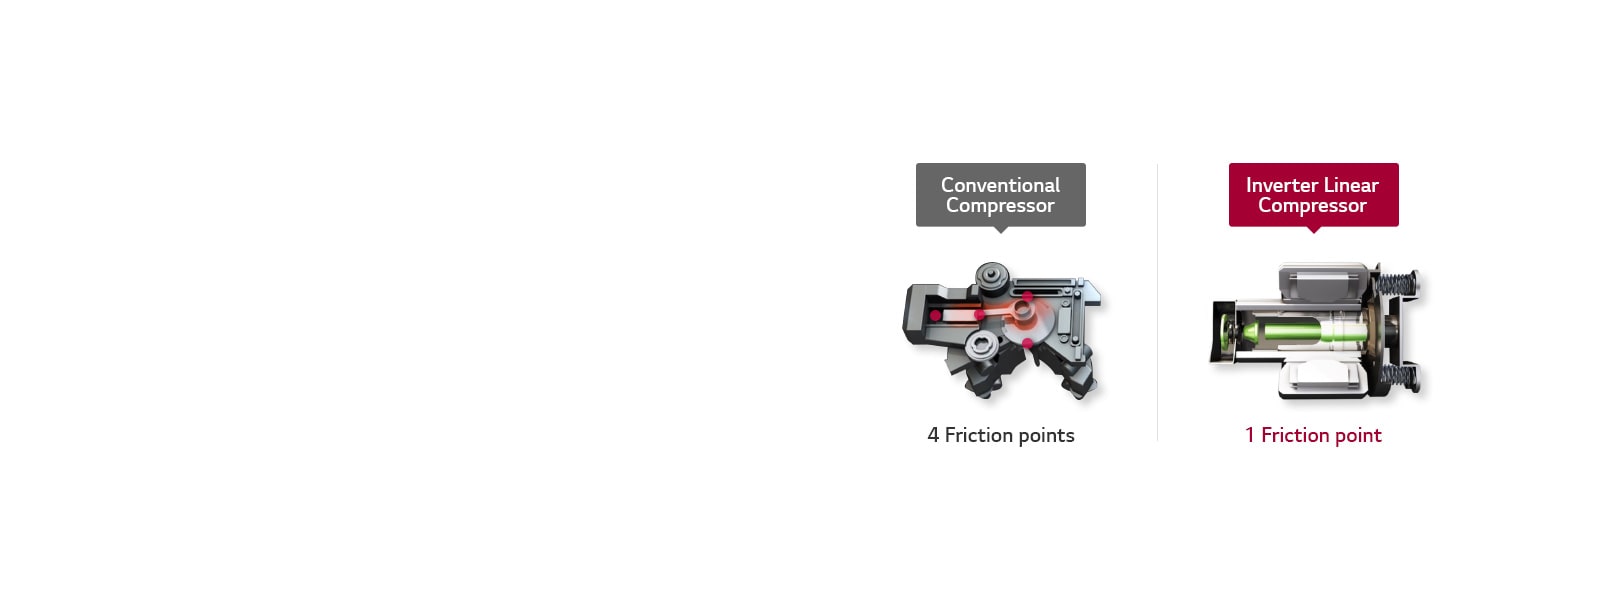 REF-P-Veyron6-Refresh-InverterLinearCompressor-LowNoise-02-D